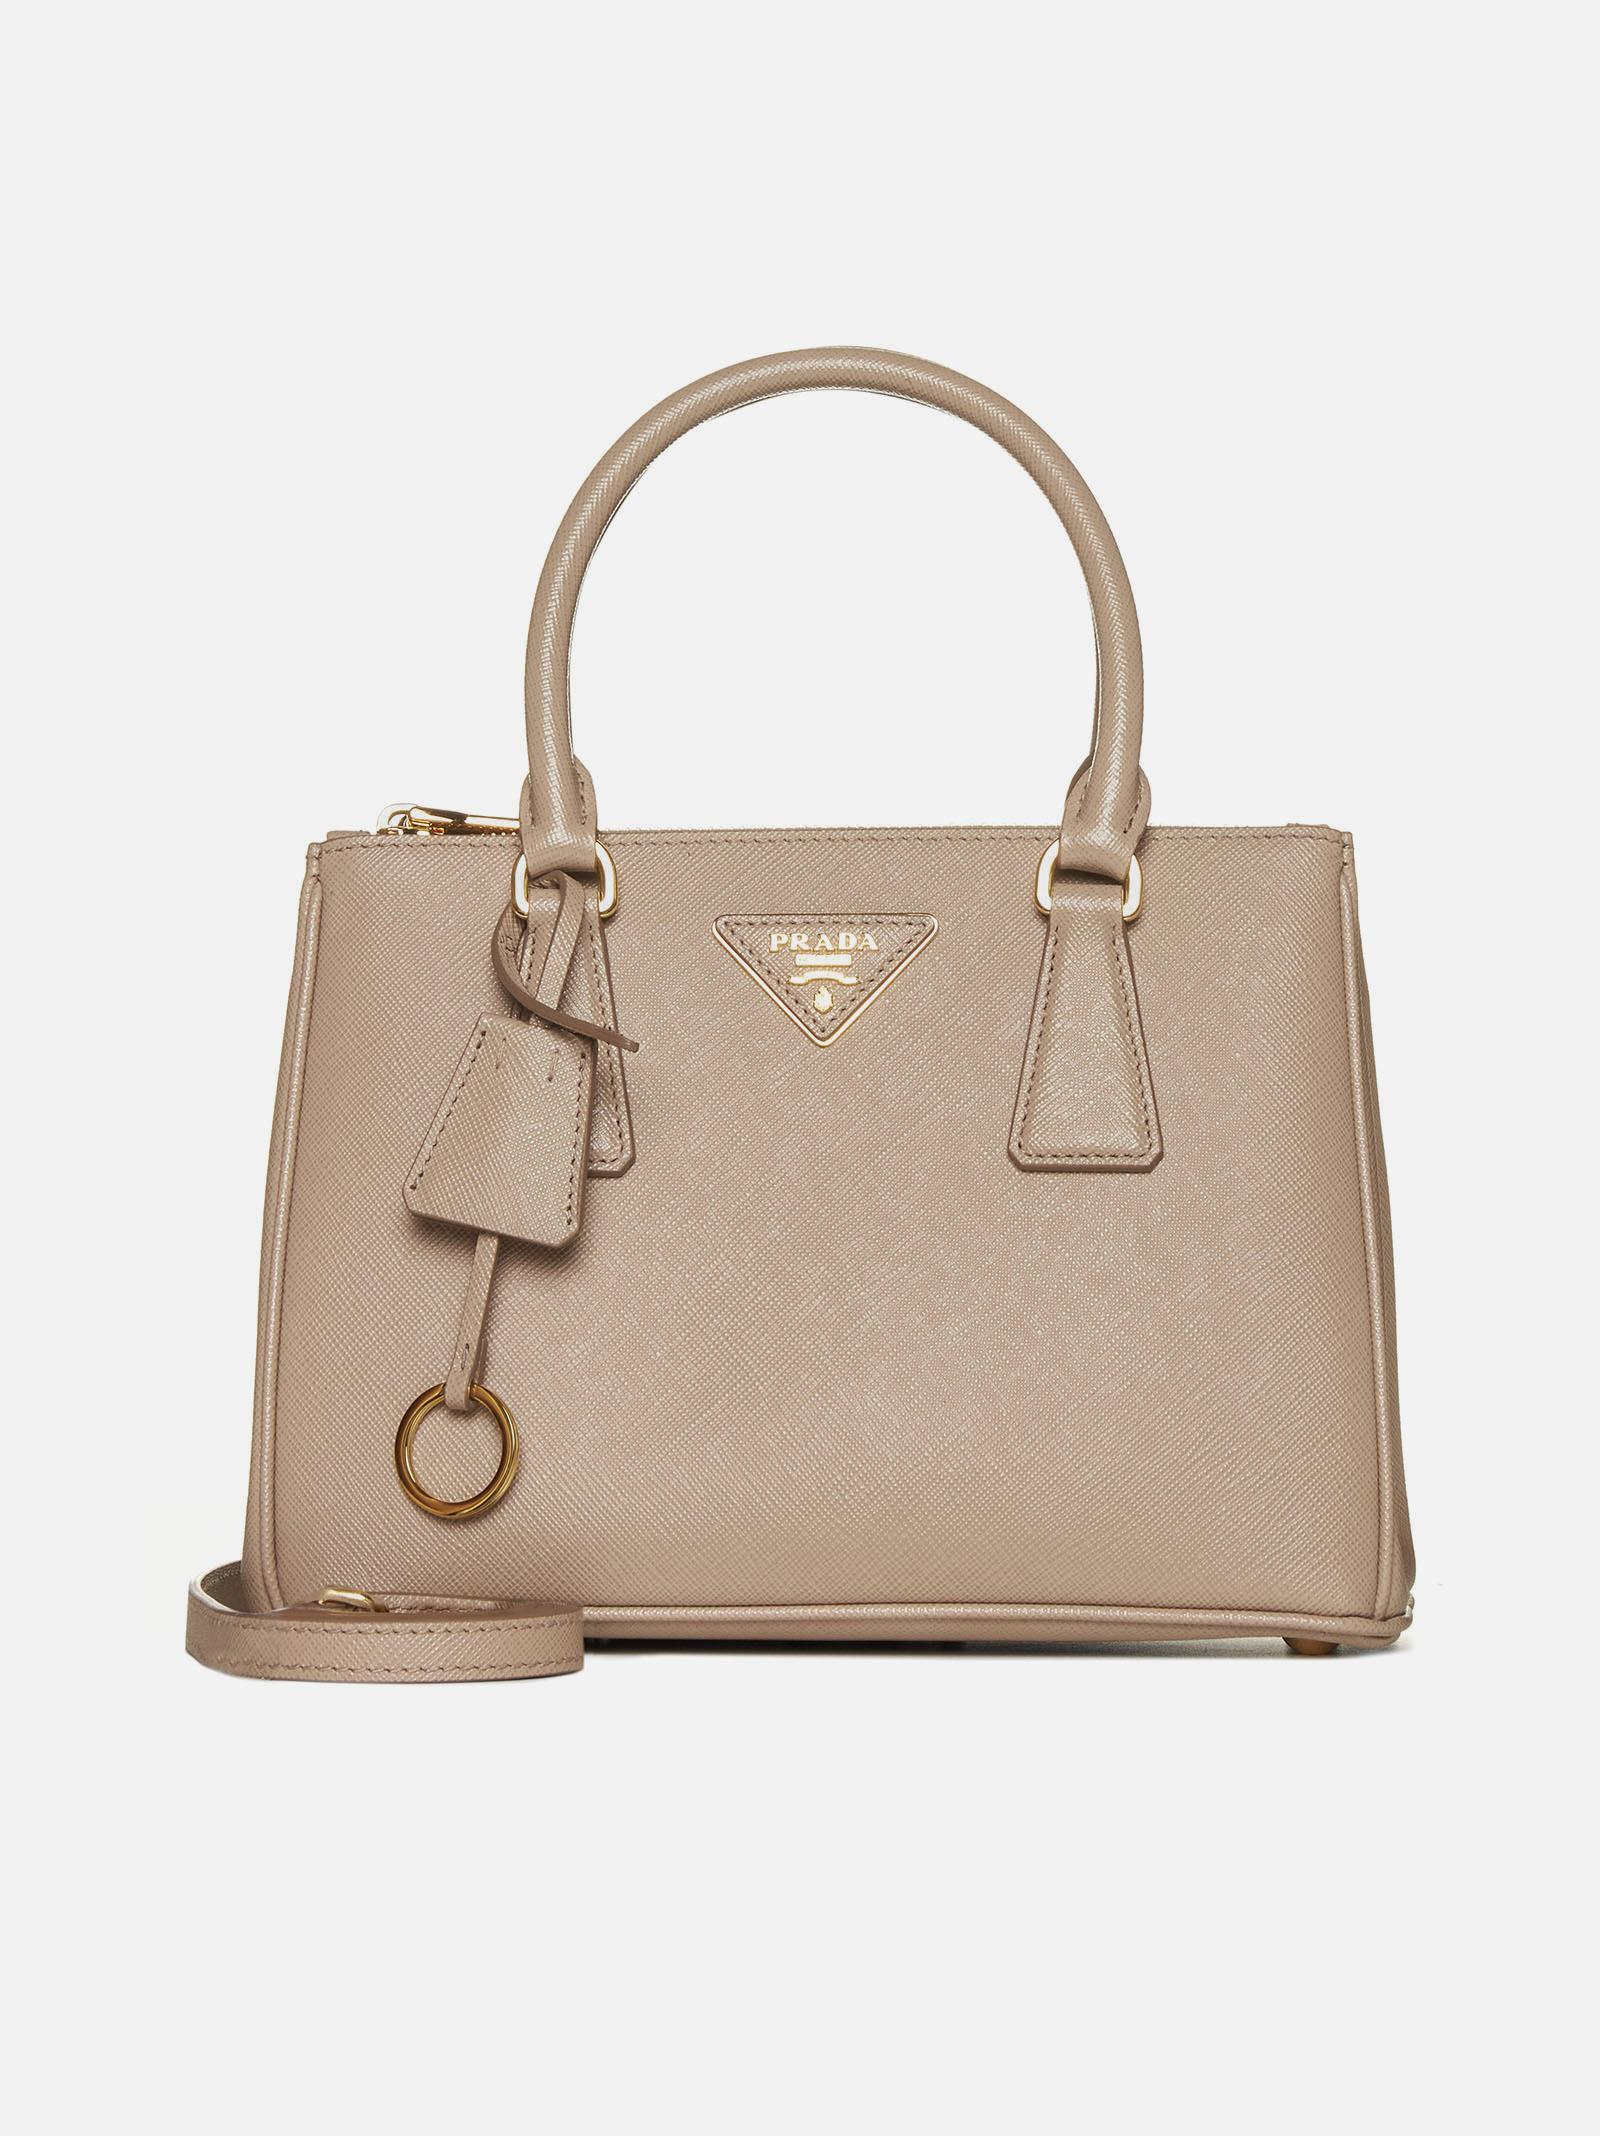 Prada Galleria Small Saffiano Leather Bag in Natural | Lyst